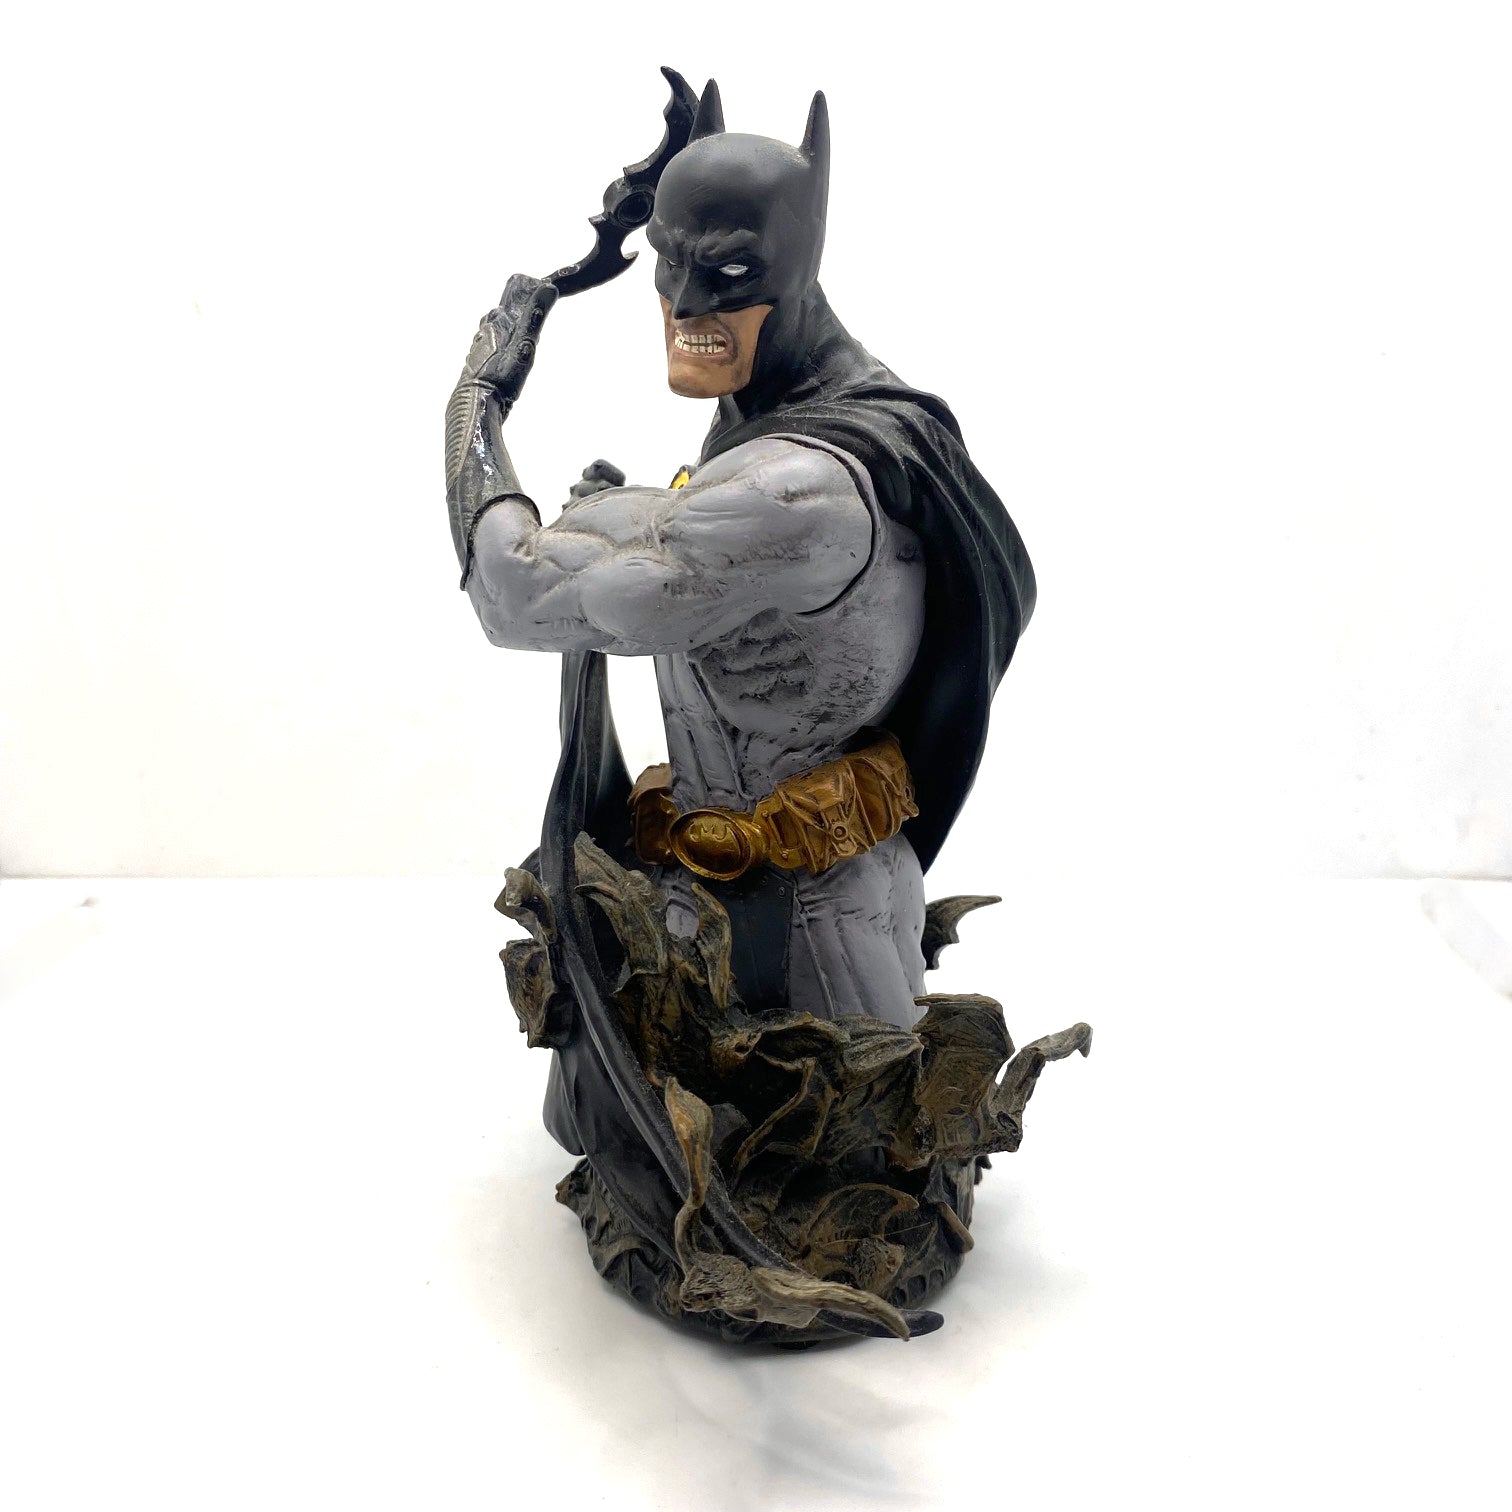 Figurine Batman Bust DC Direct Limited Edition